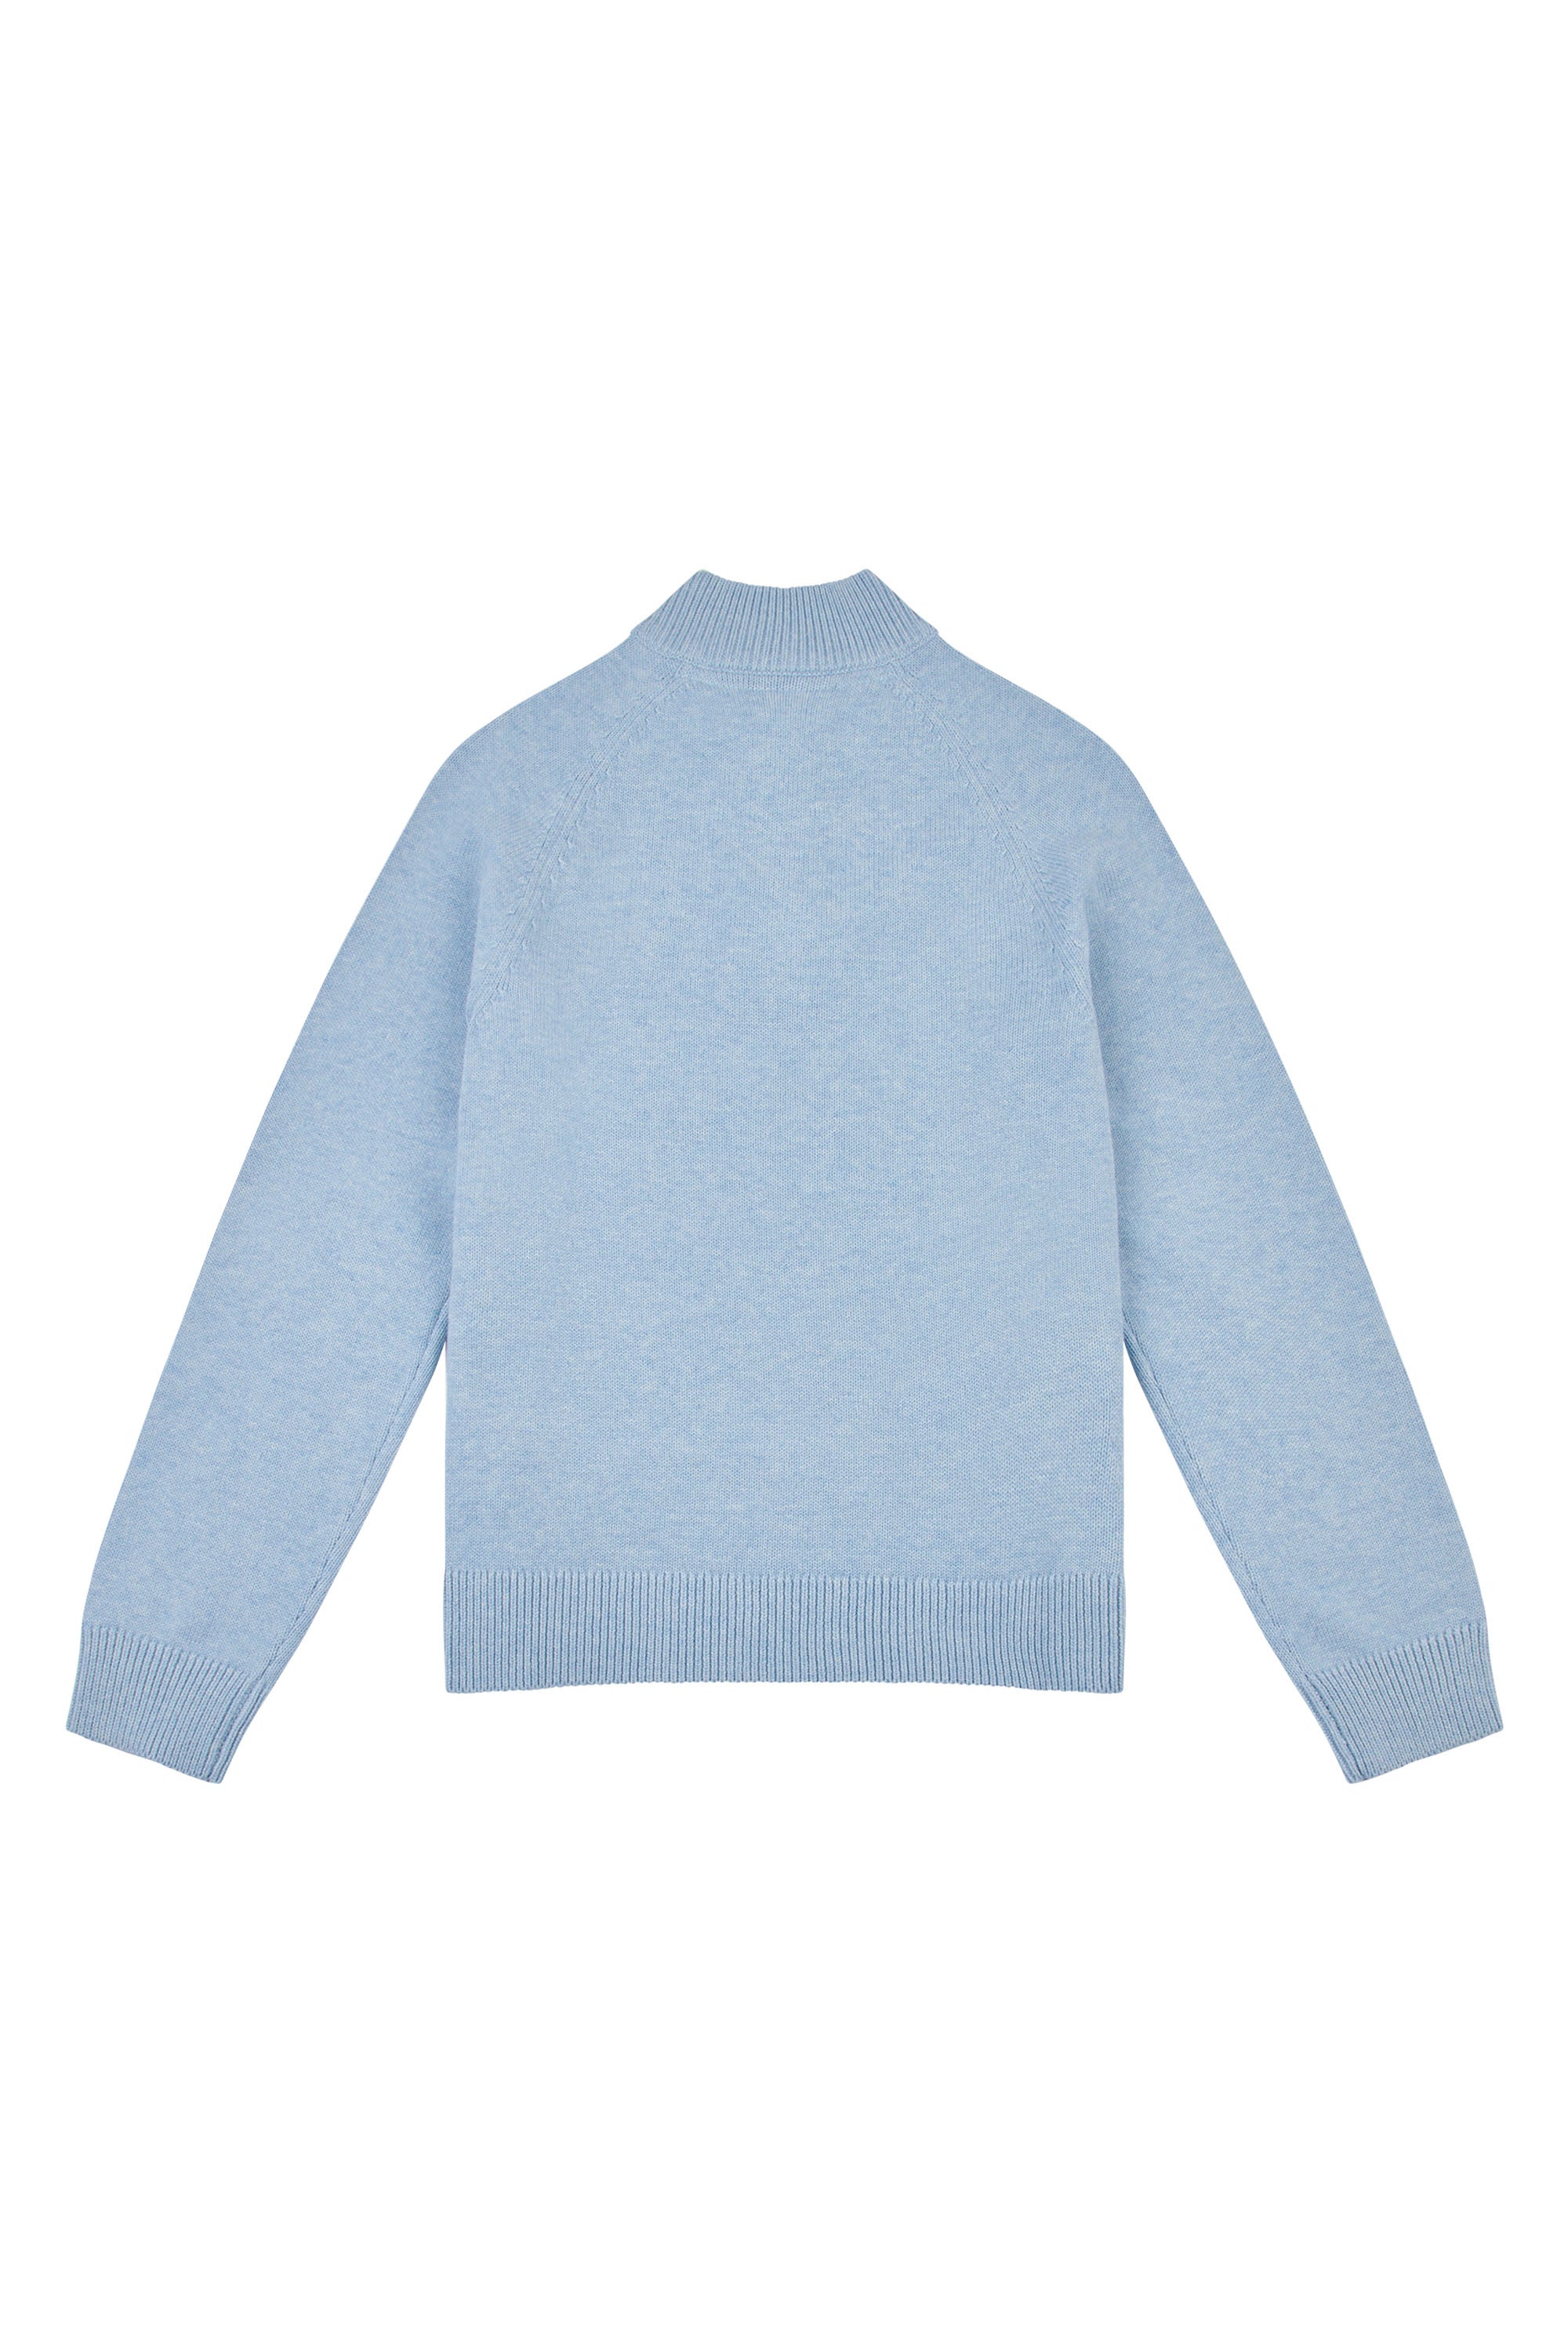 Boys Quarter Zip Knitted Sweatshirt in Parisian Blue Marl